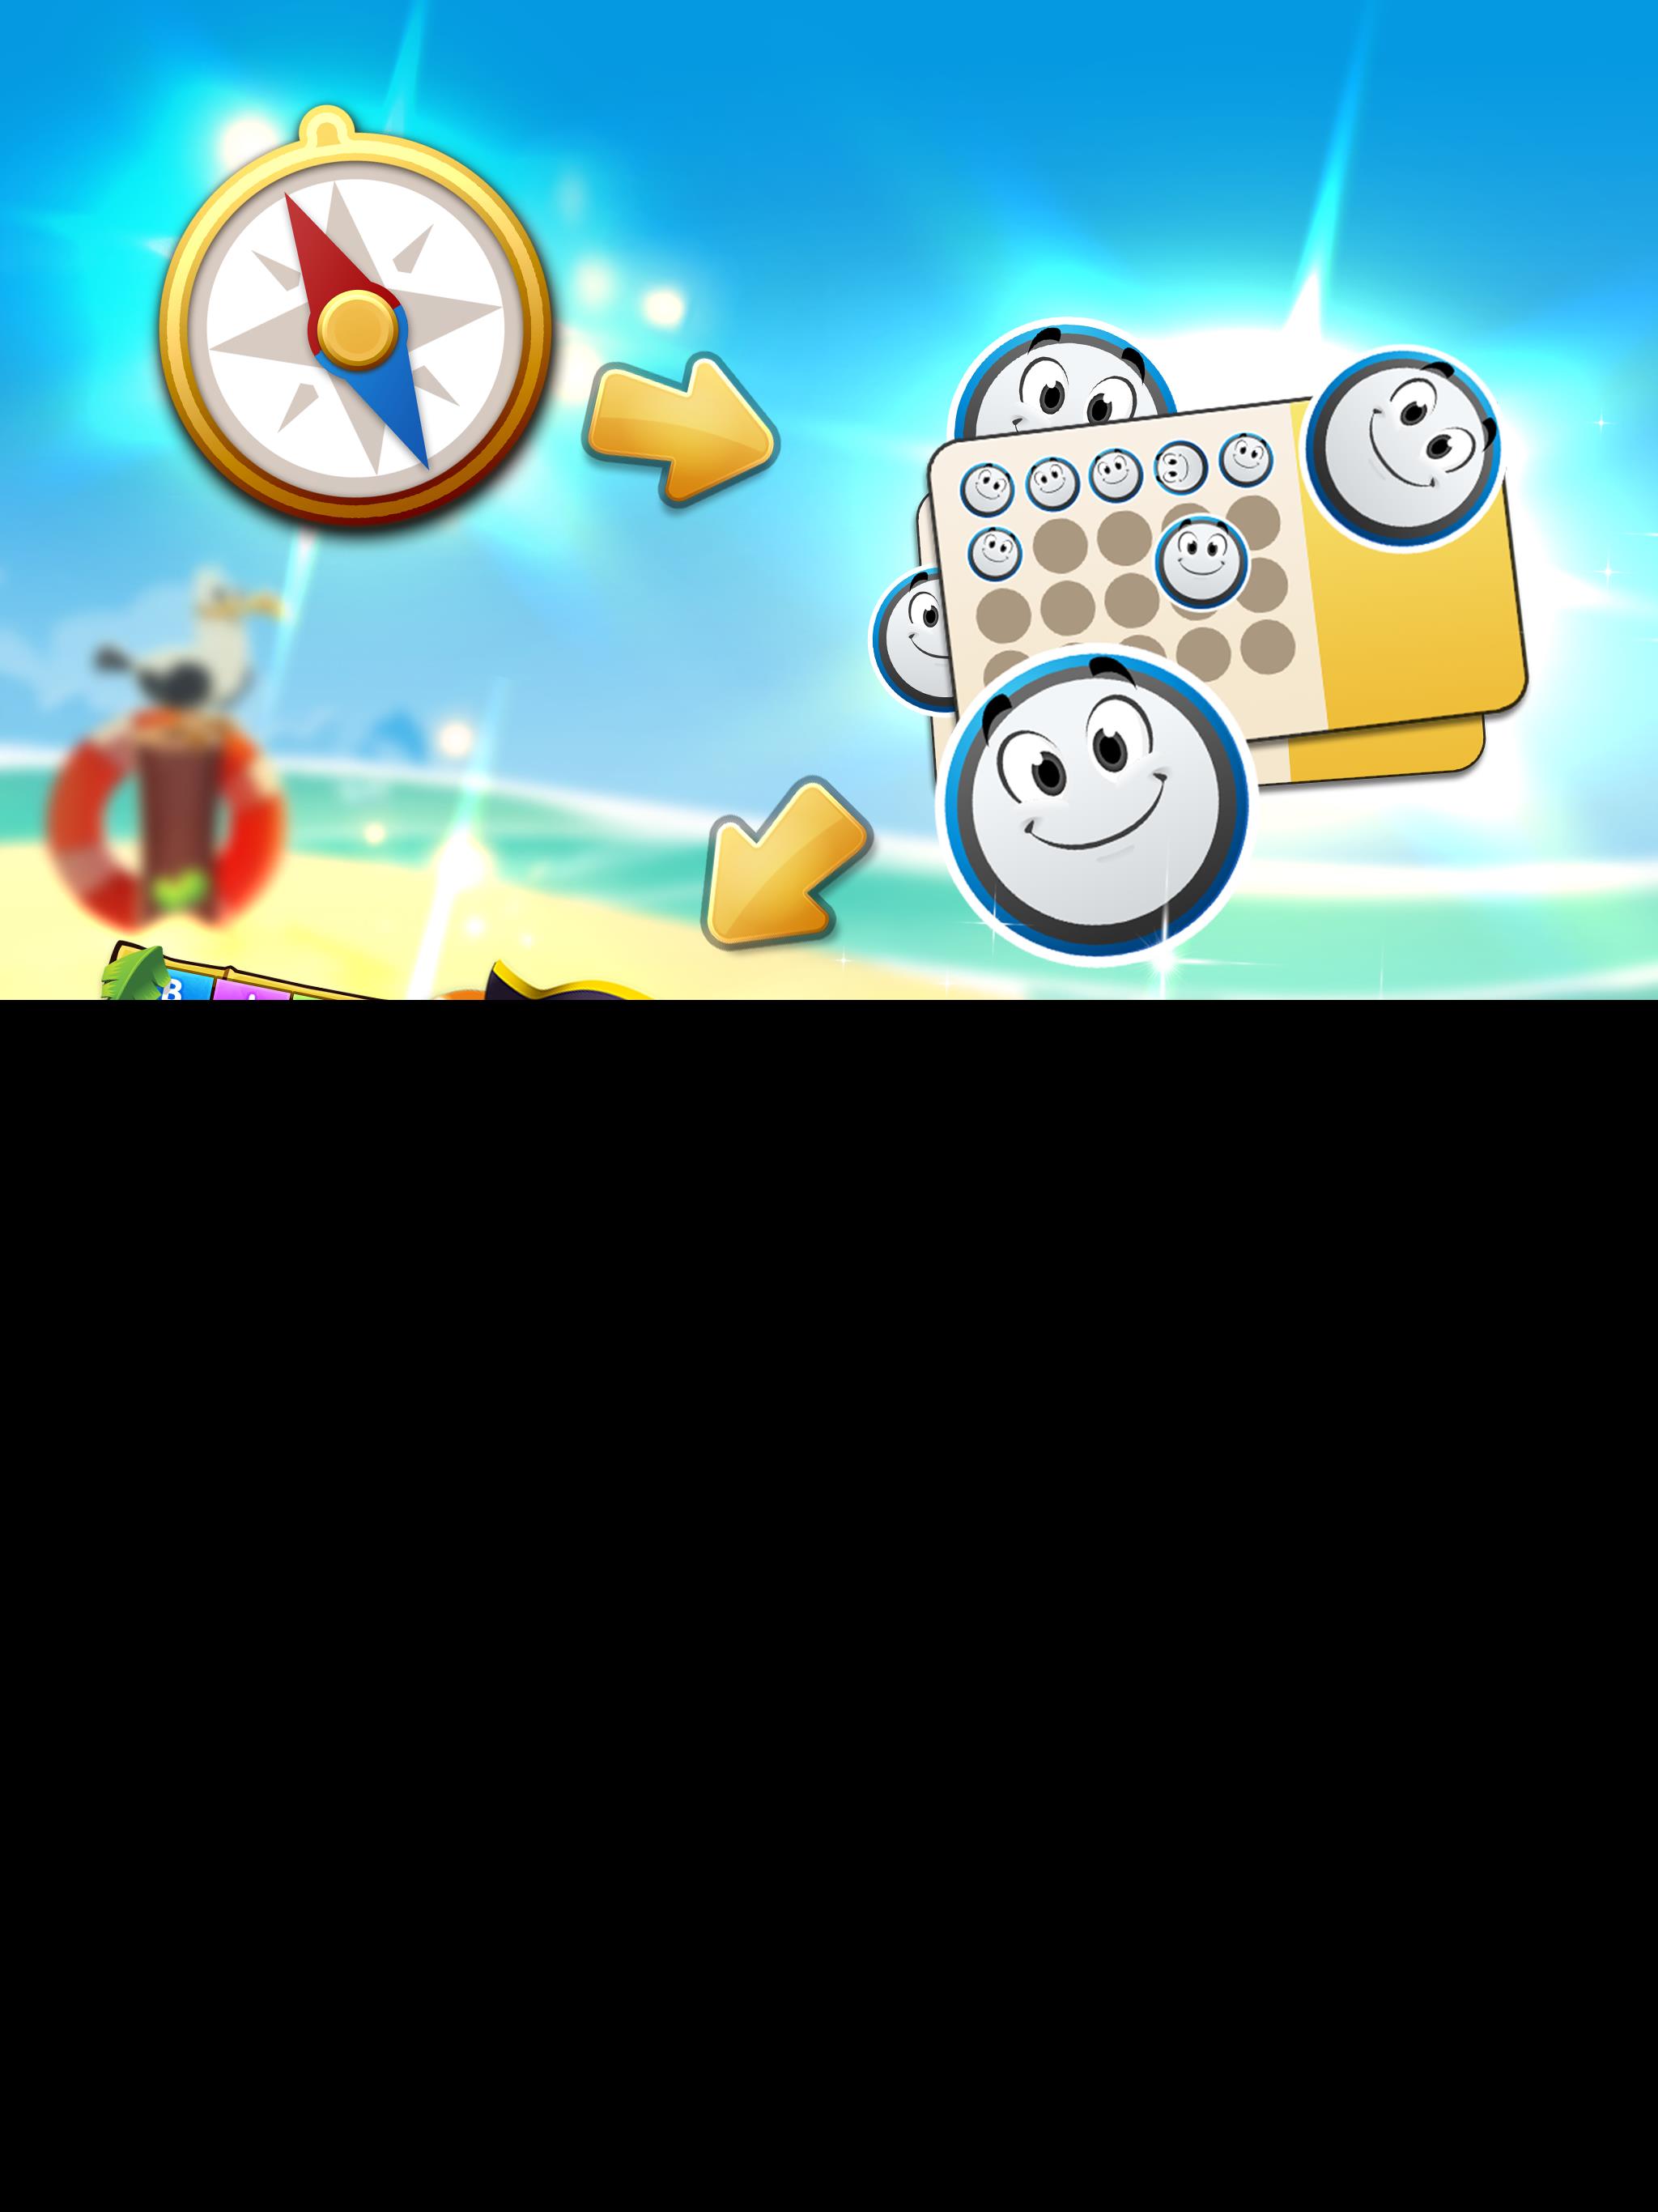 GamePoint Bingo - Bingo games Screenshot 21